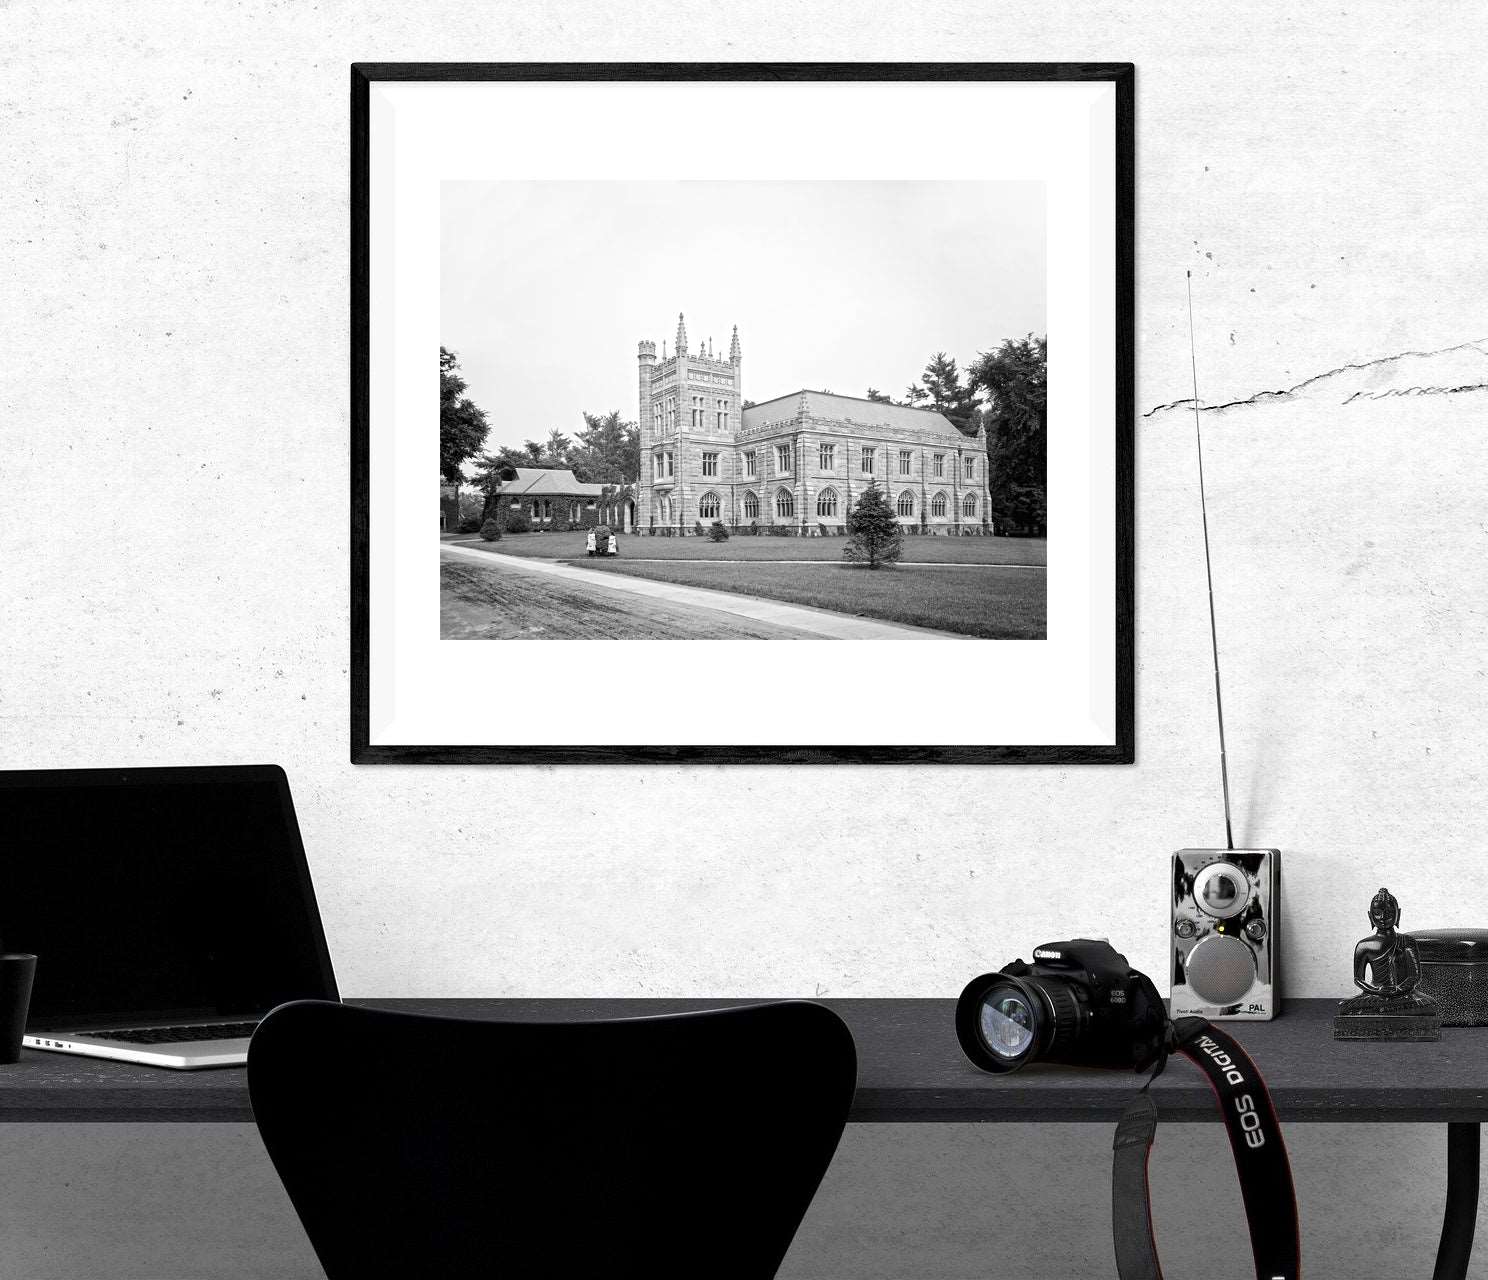 A framed print of Princeton University hanging on a white wal above a black desk